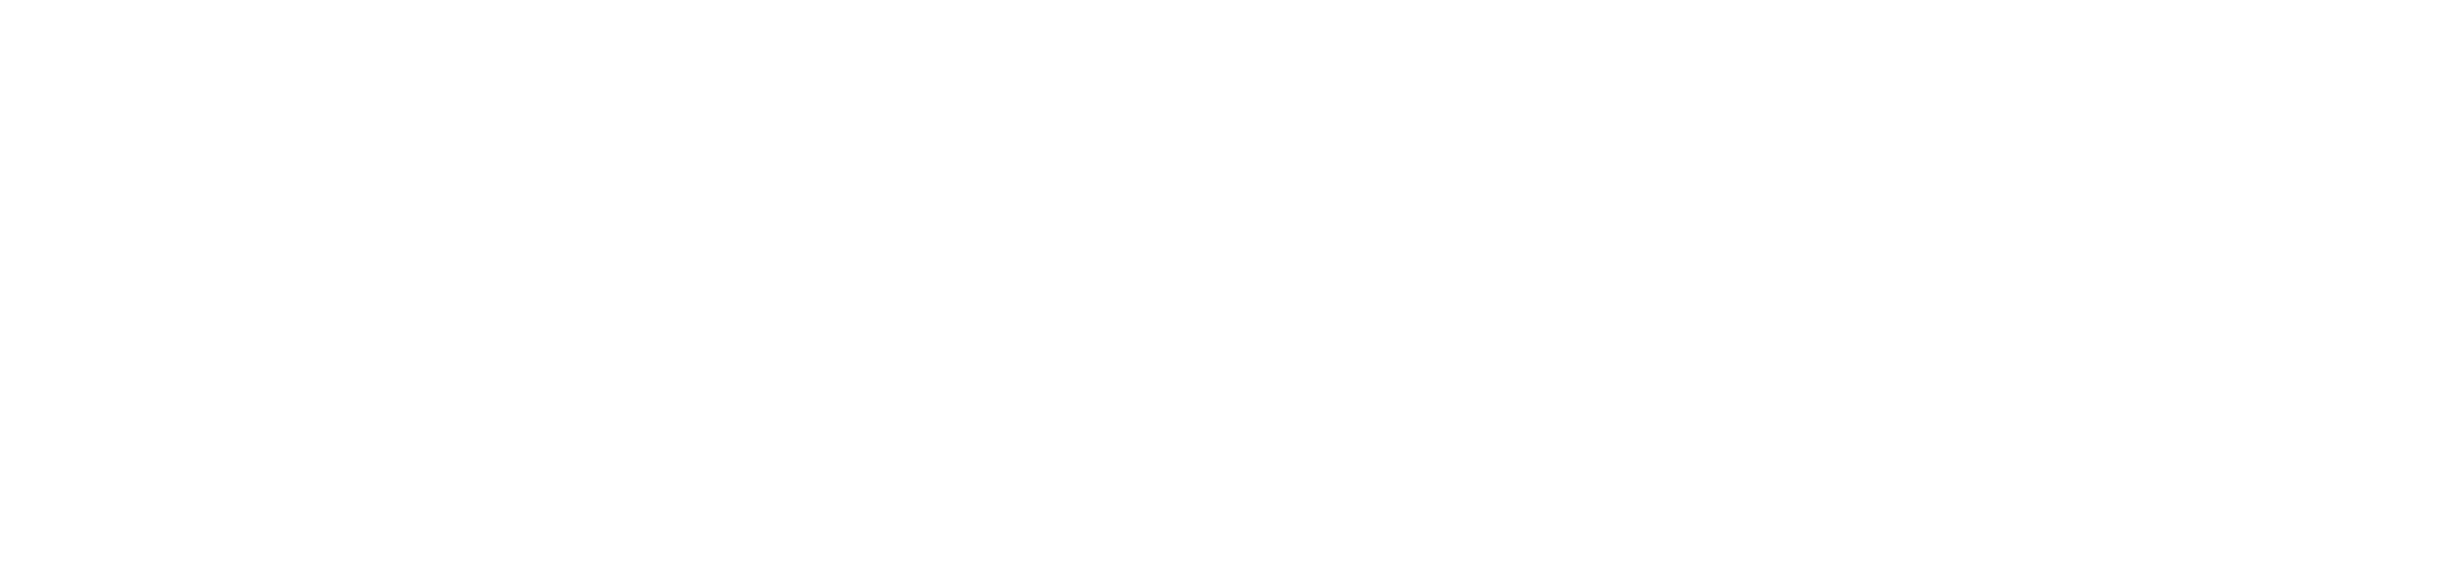 mosquiluz logo blanco